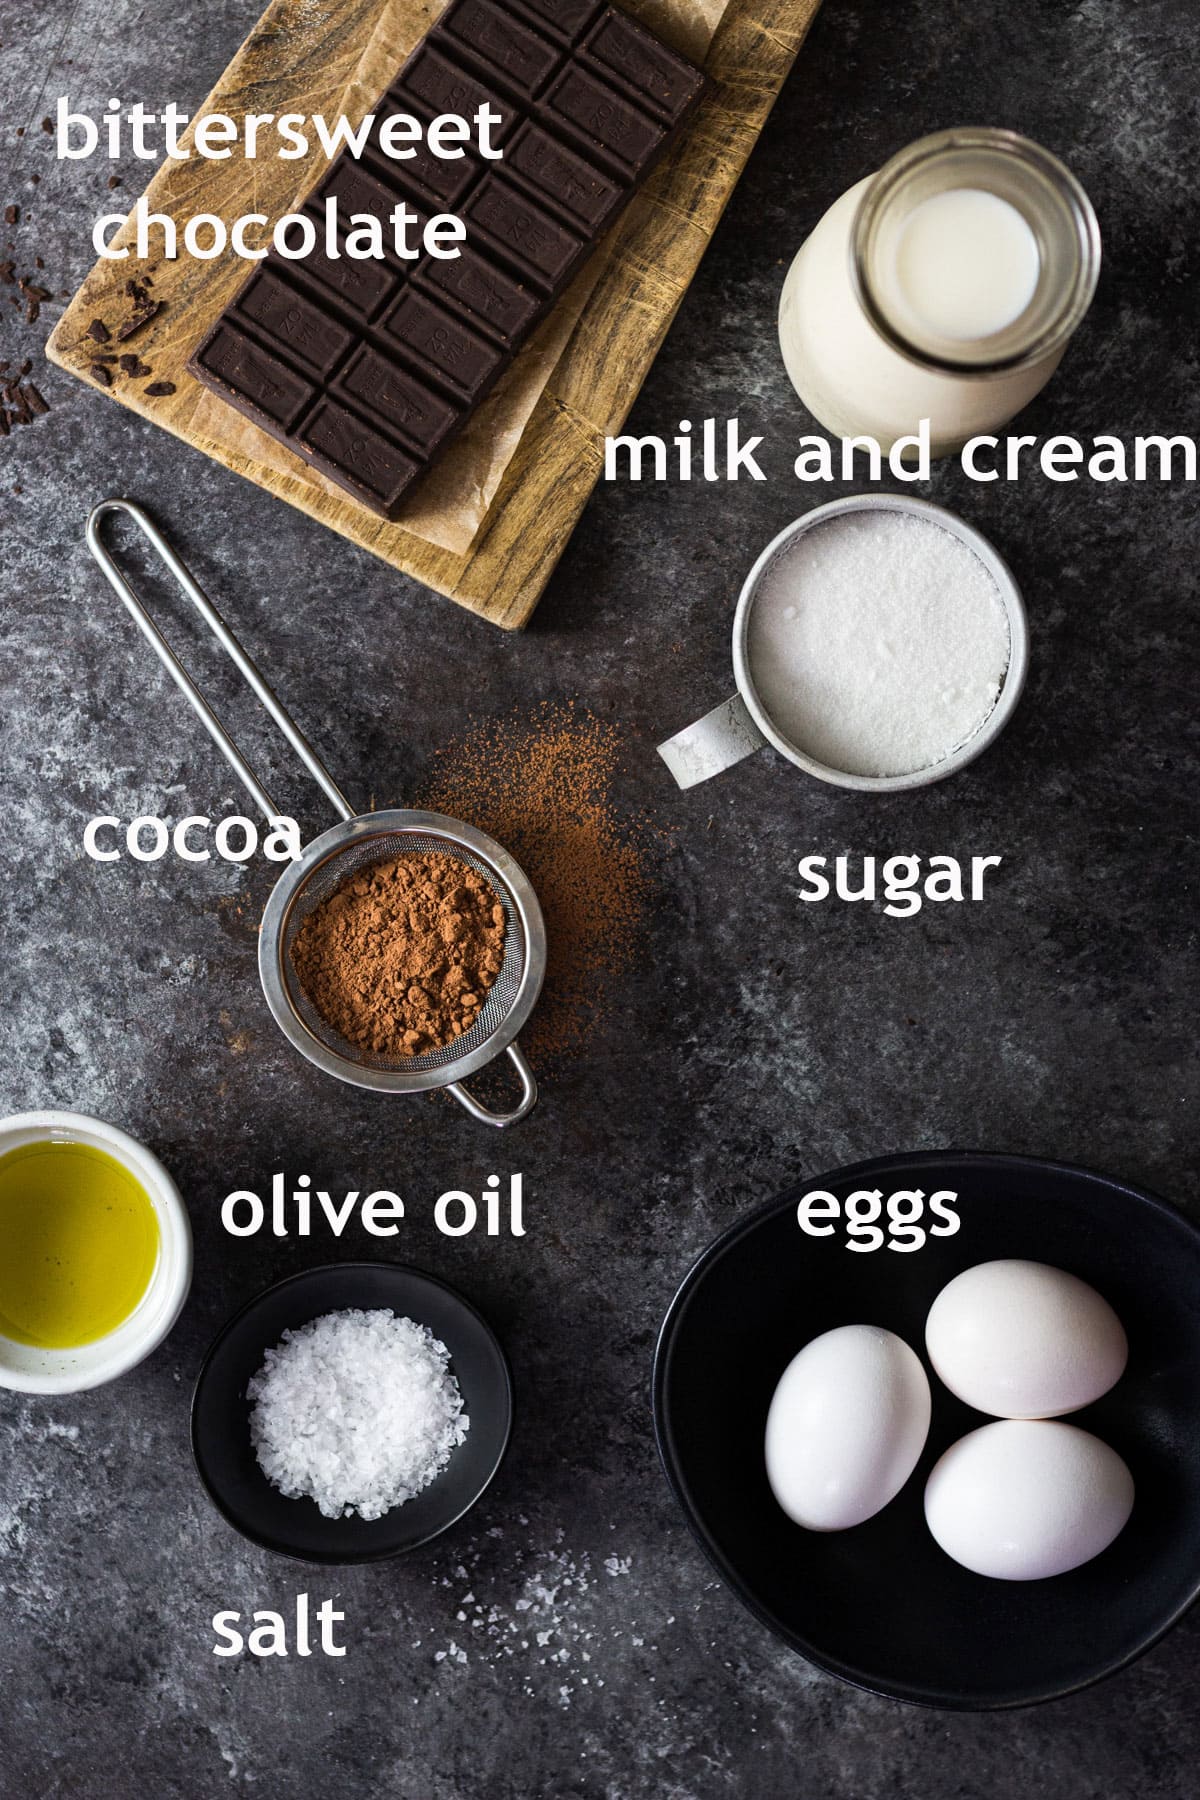 Chocolate ice cream ingredients, including chocolate, cocoa, milk, cream, sugar, olive oil, eggs and salt.